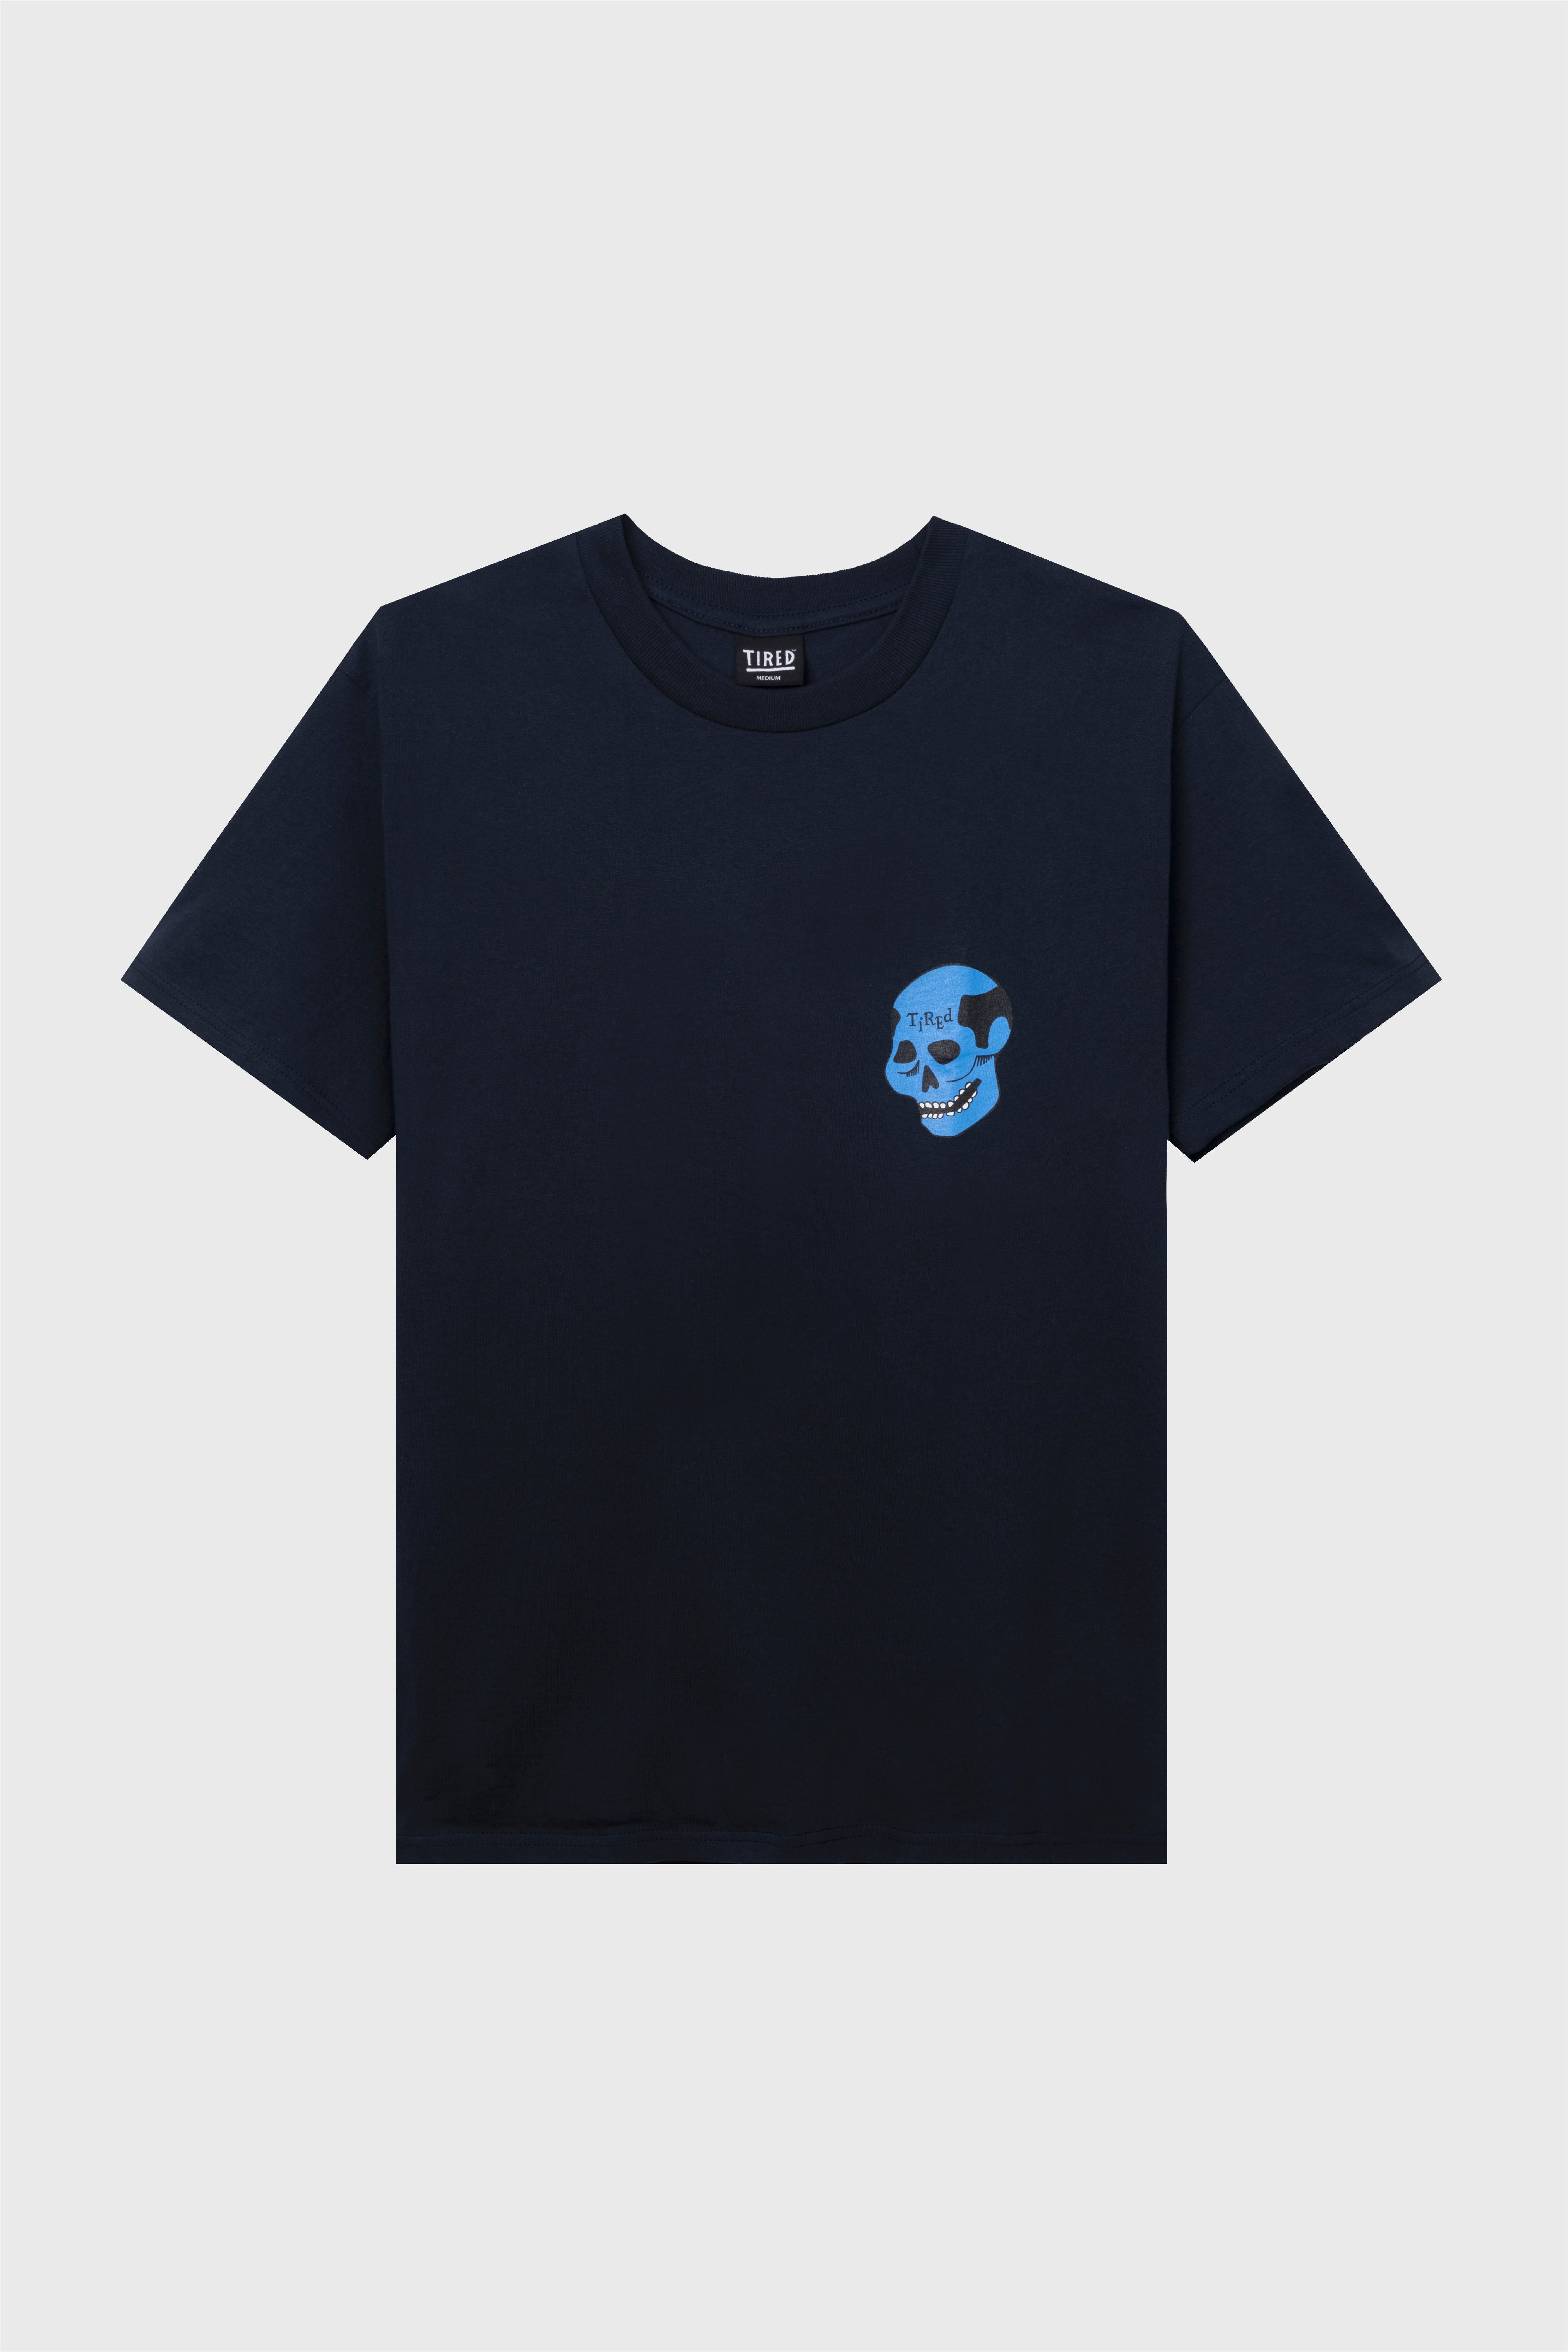 Selectshop FRAME - TIRED Creepy Skull SS Tee T-Shirts Dubai